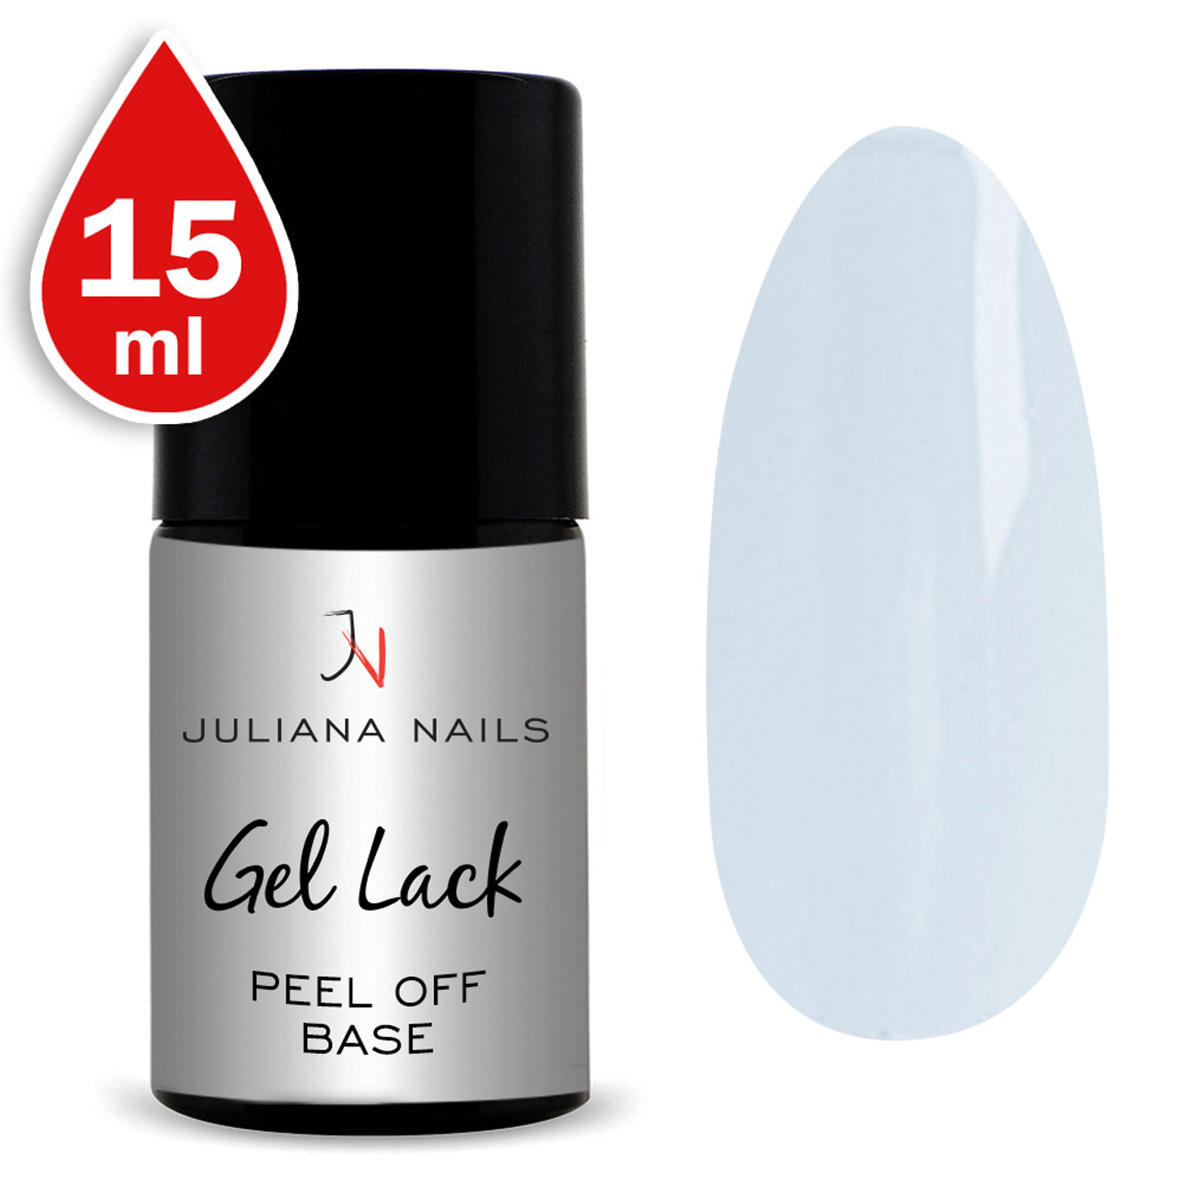 Juliana Nails Gel Lack Peel Off Base 15 ml - 1